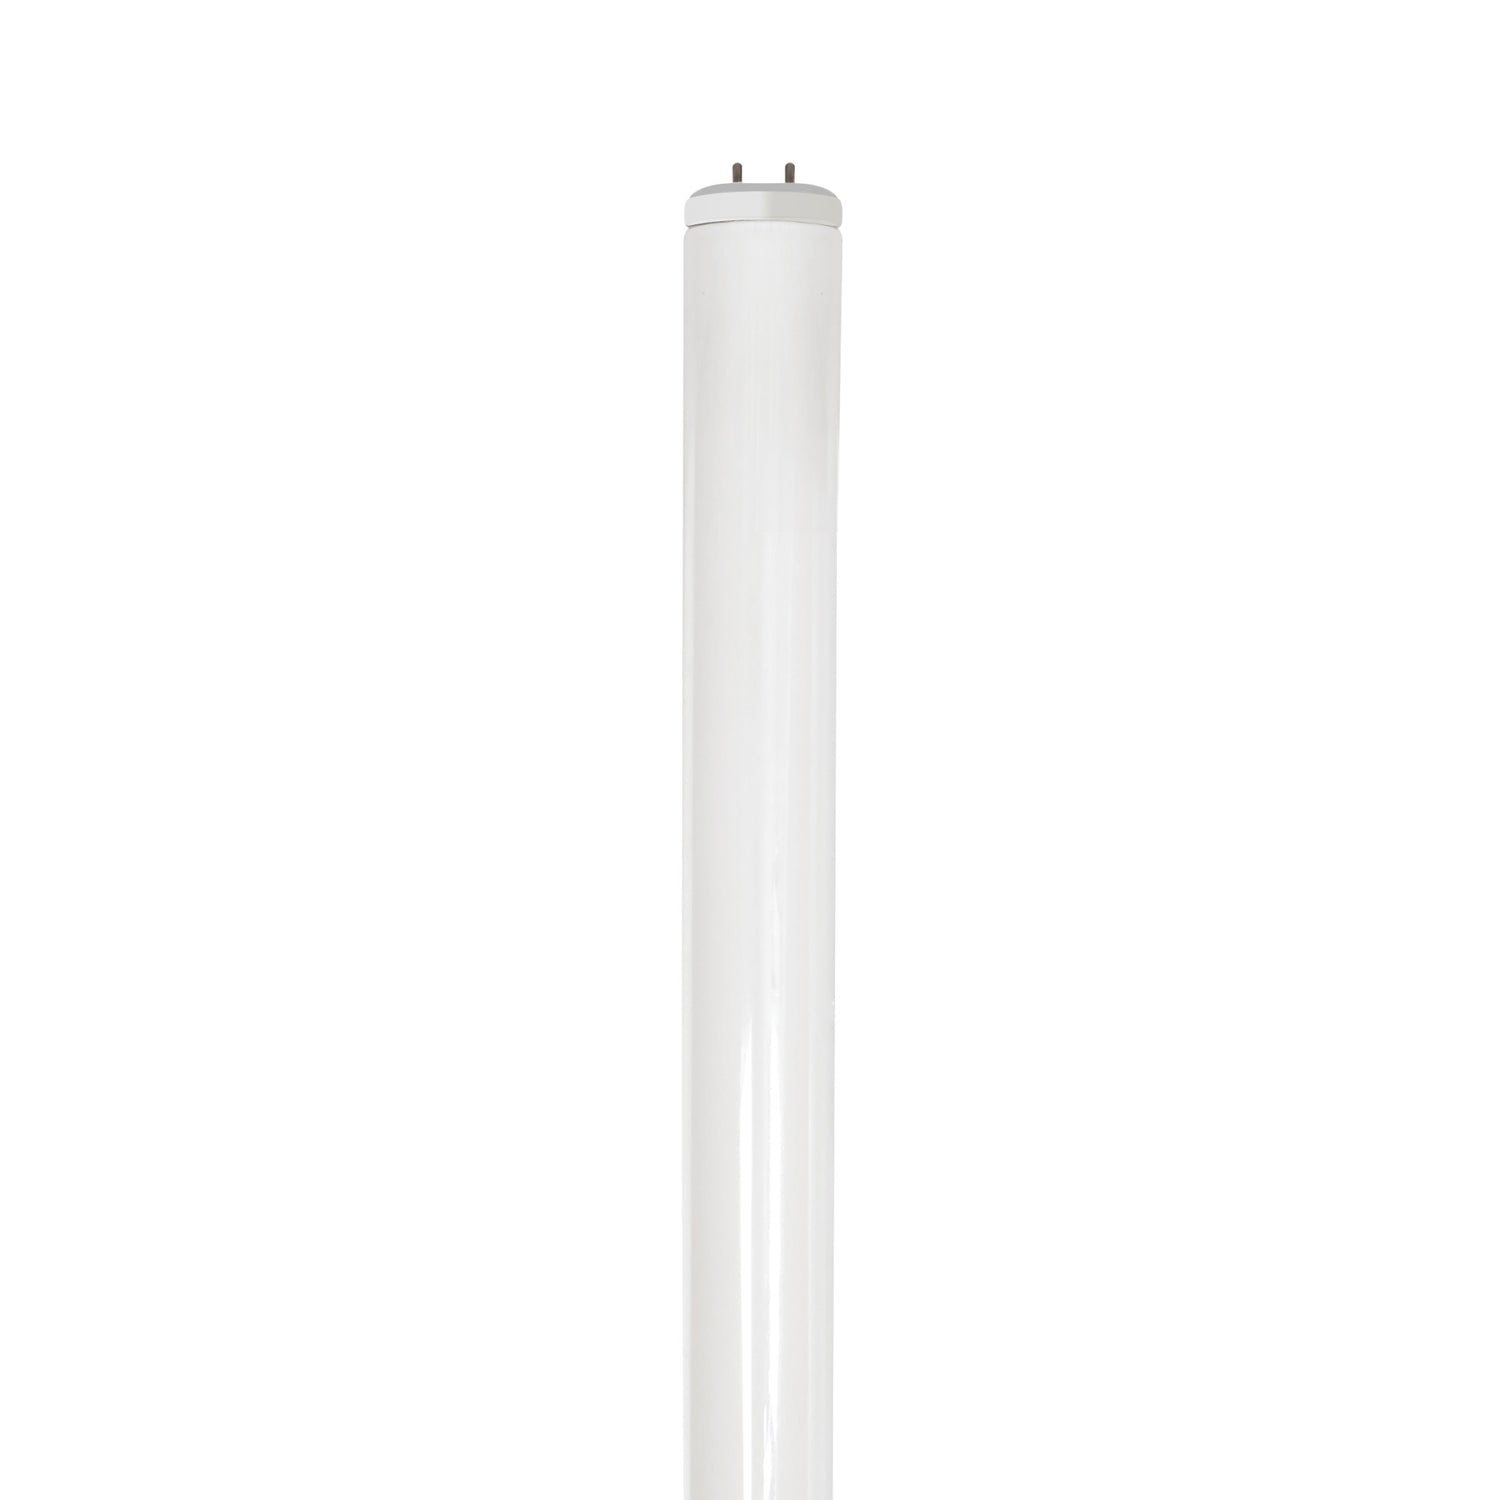 4 ft. 32W Bright White (3000K) T8 G13 Base High Output Fluorescent Linear Tube (2-Pack)